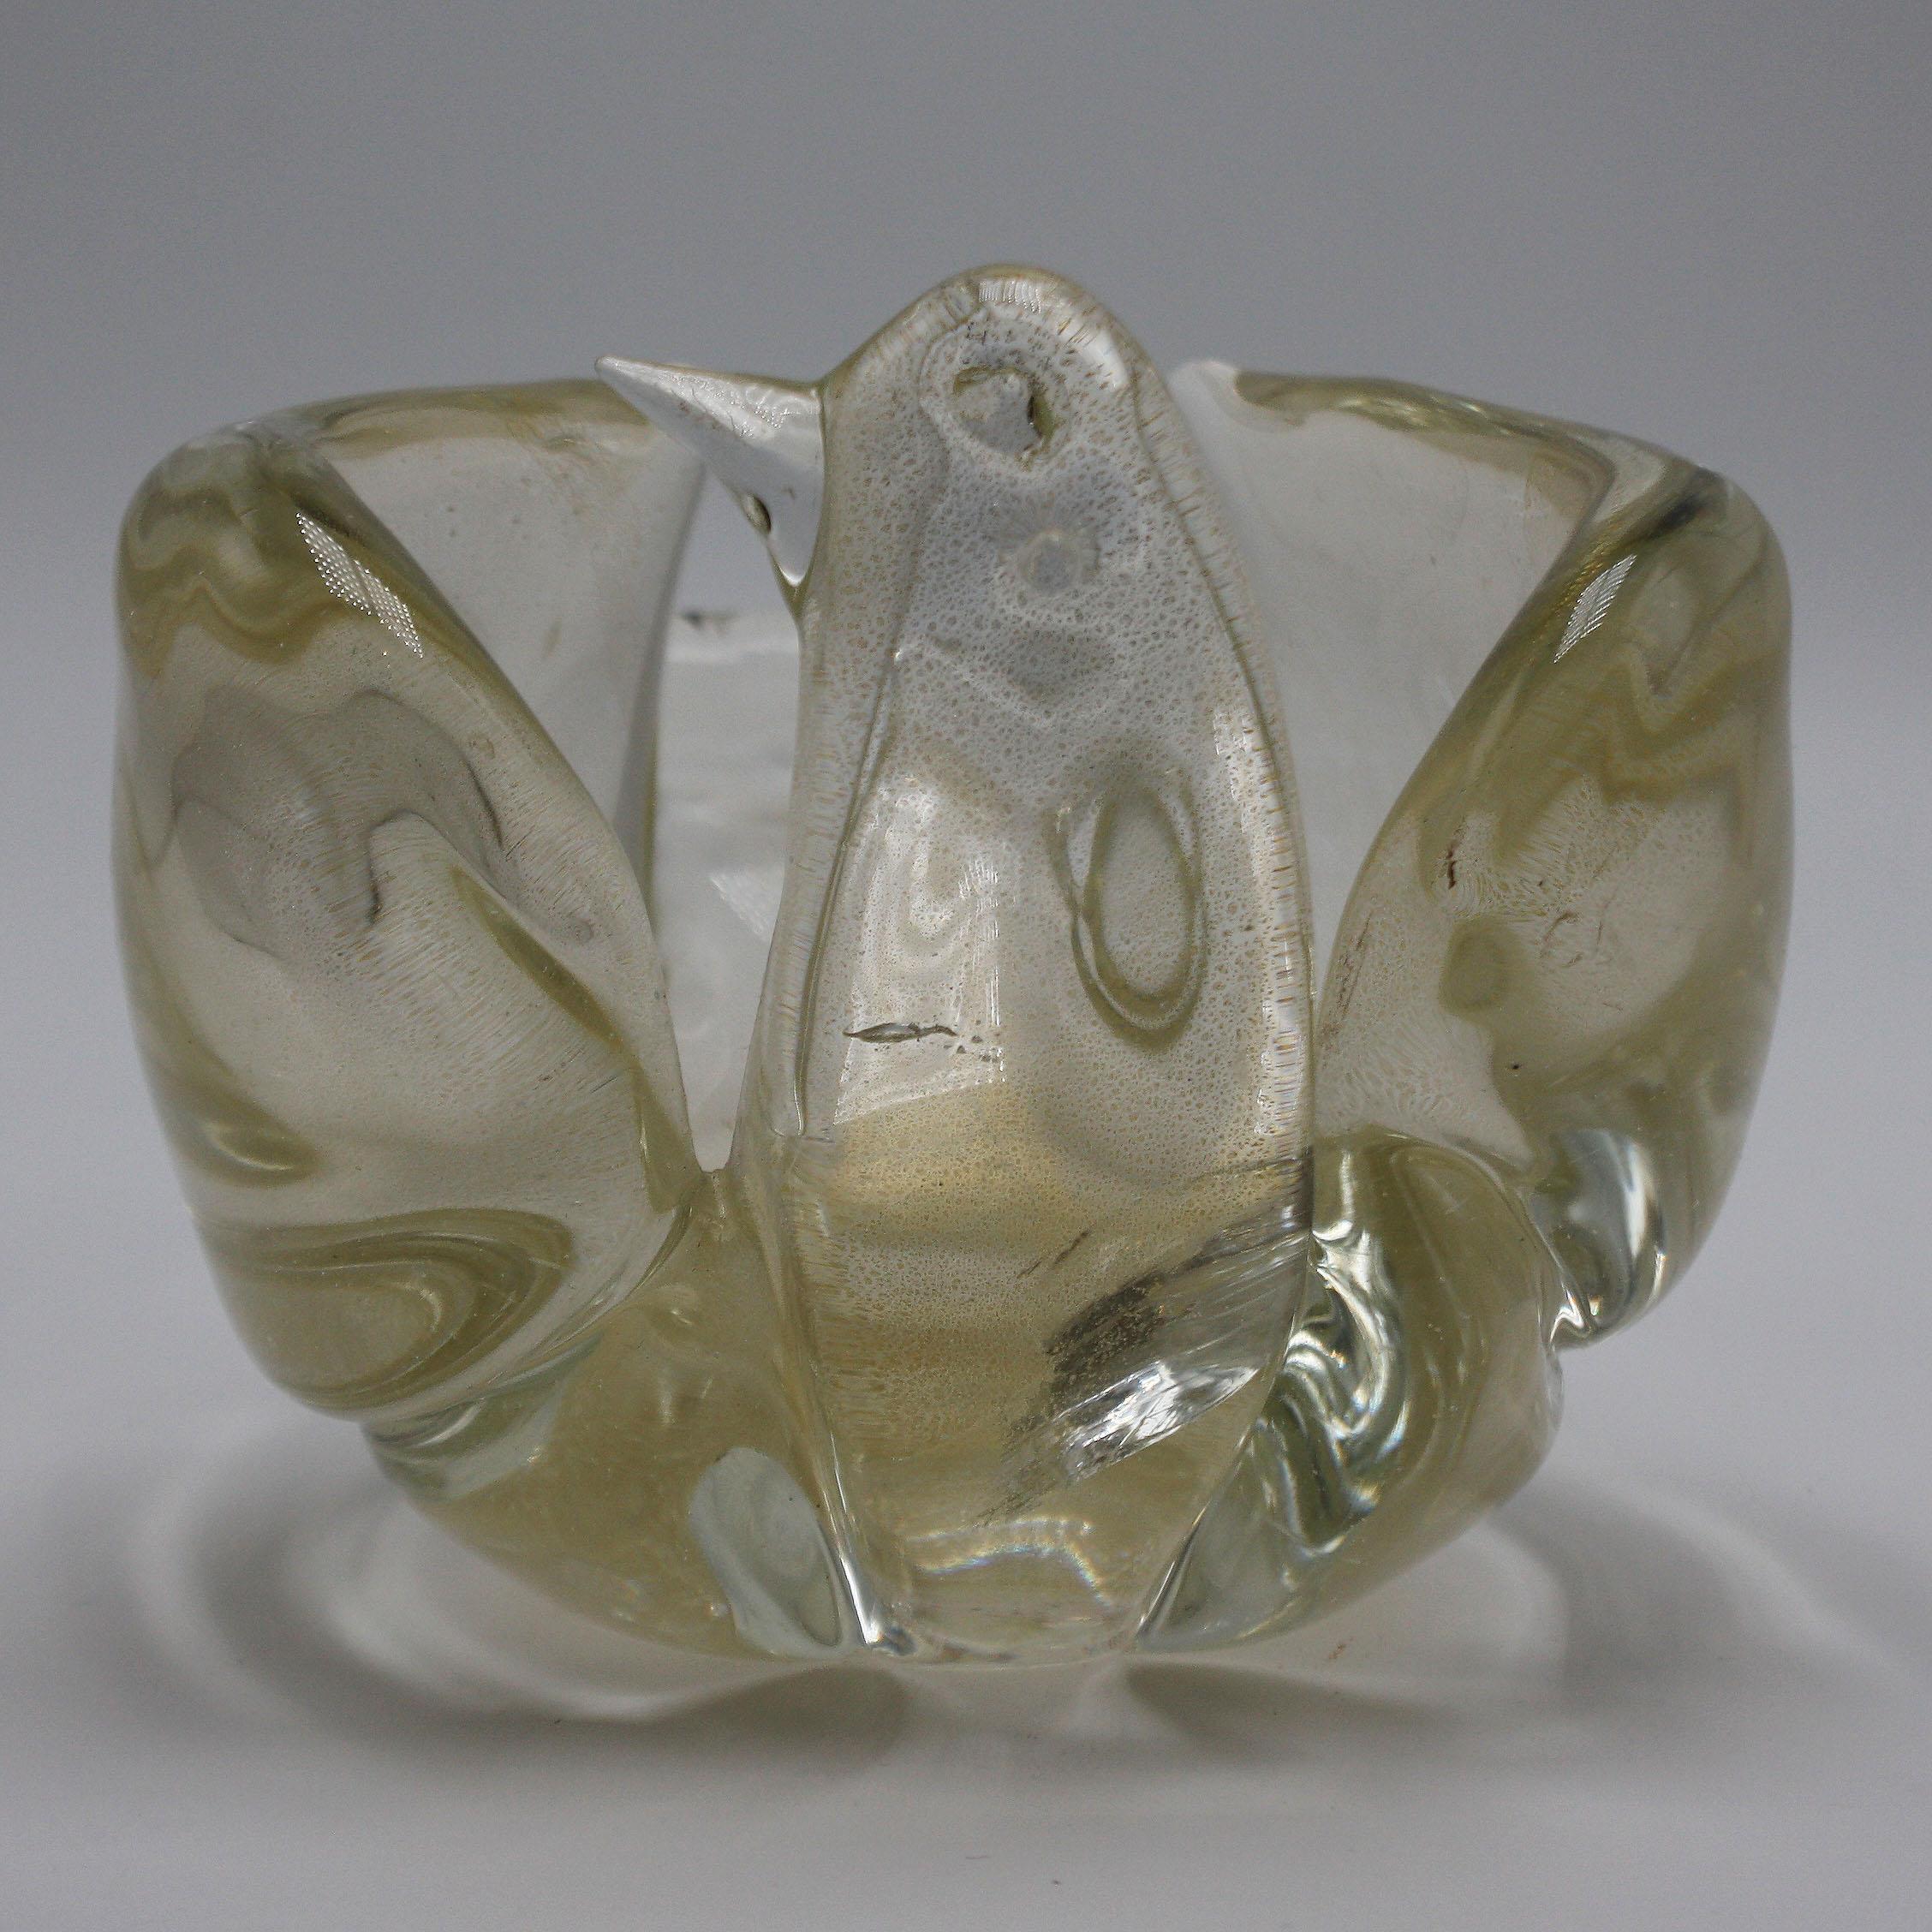 Murano glass dove bowl with gold flecks, circa 1950
Measures: 7” W x 4 3/4” D x 3 3/4” H.